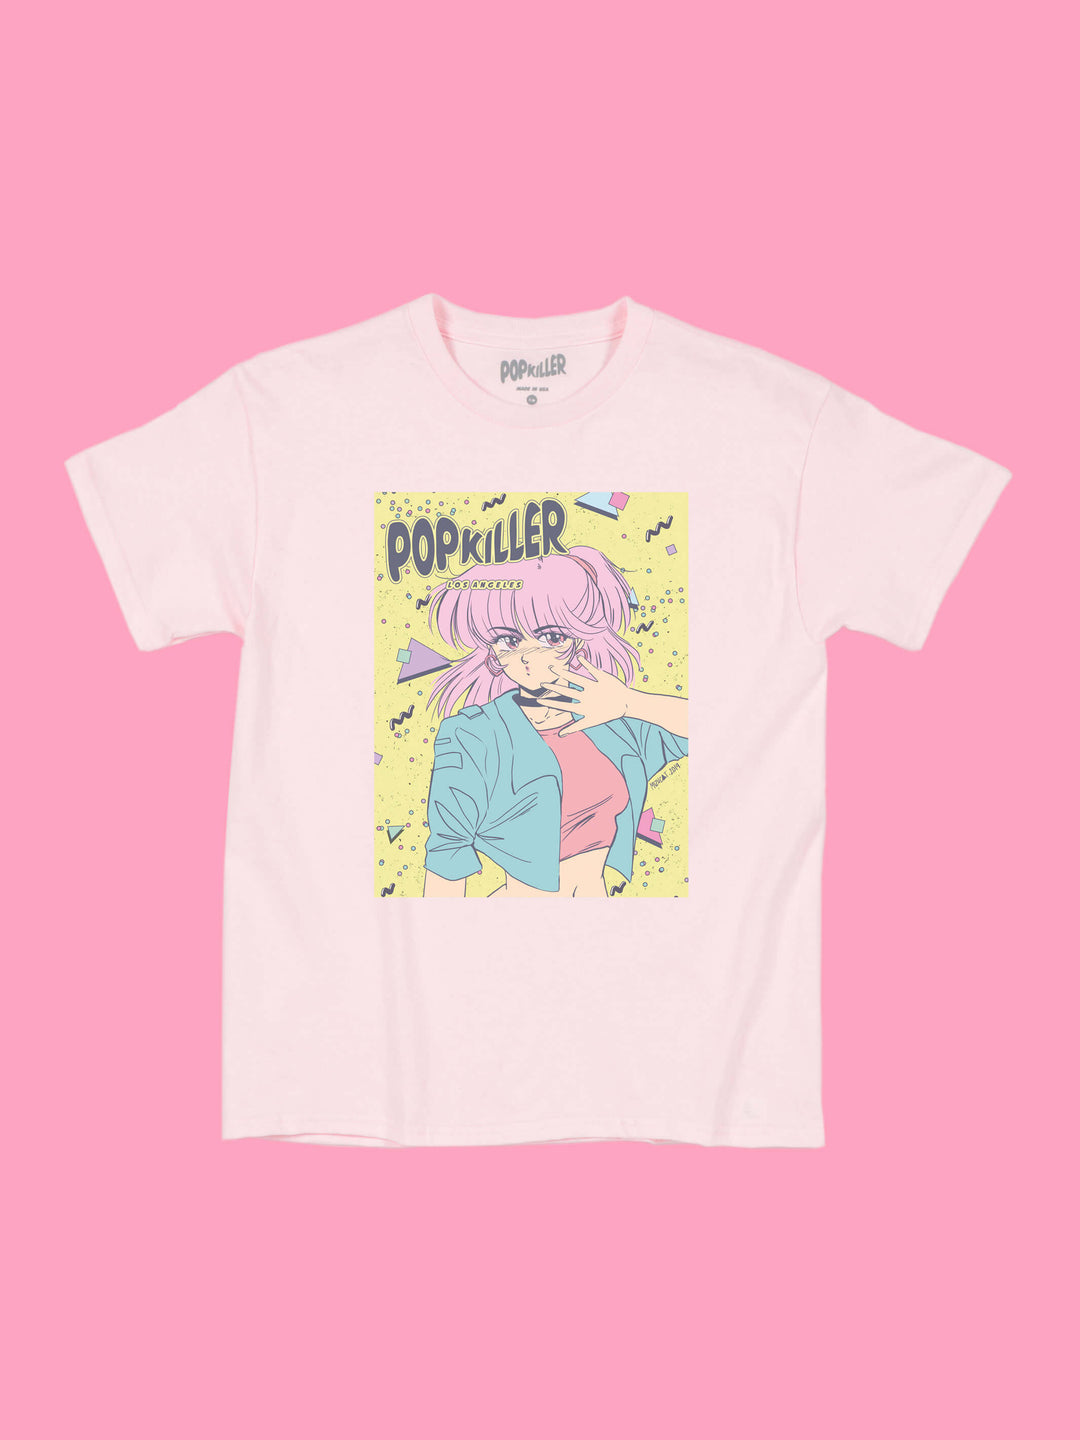 City Pop aesthetic Japanese t-shirt.